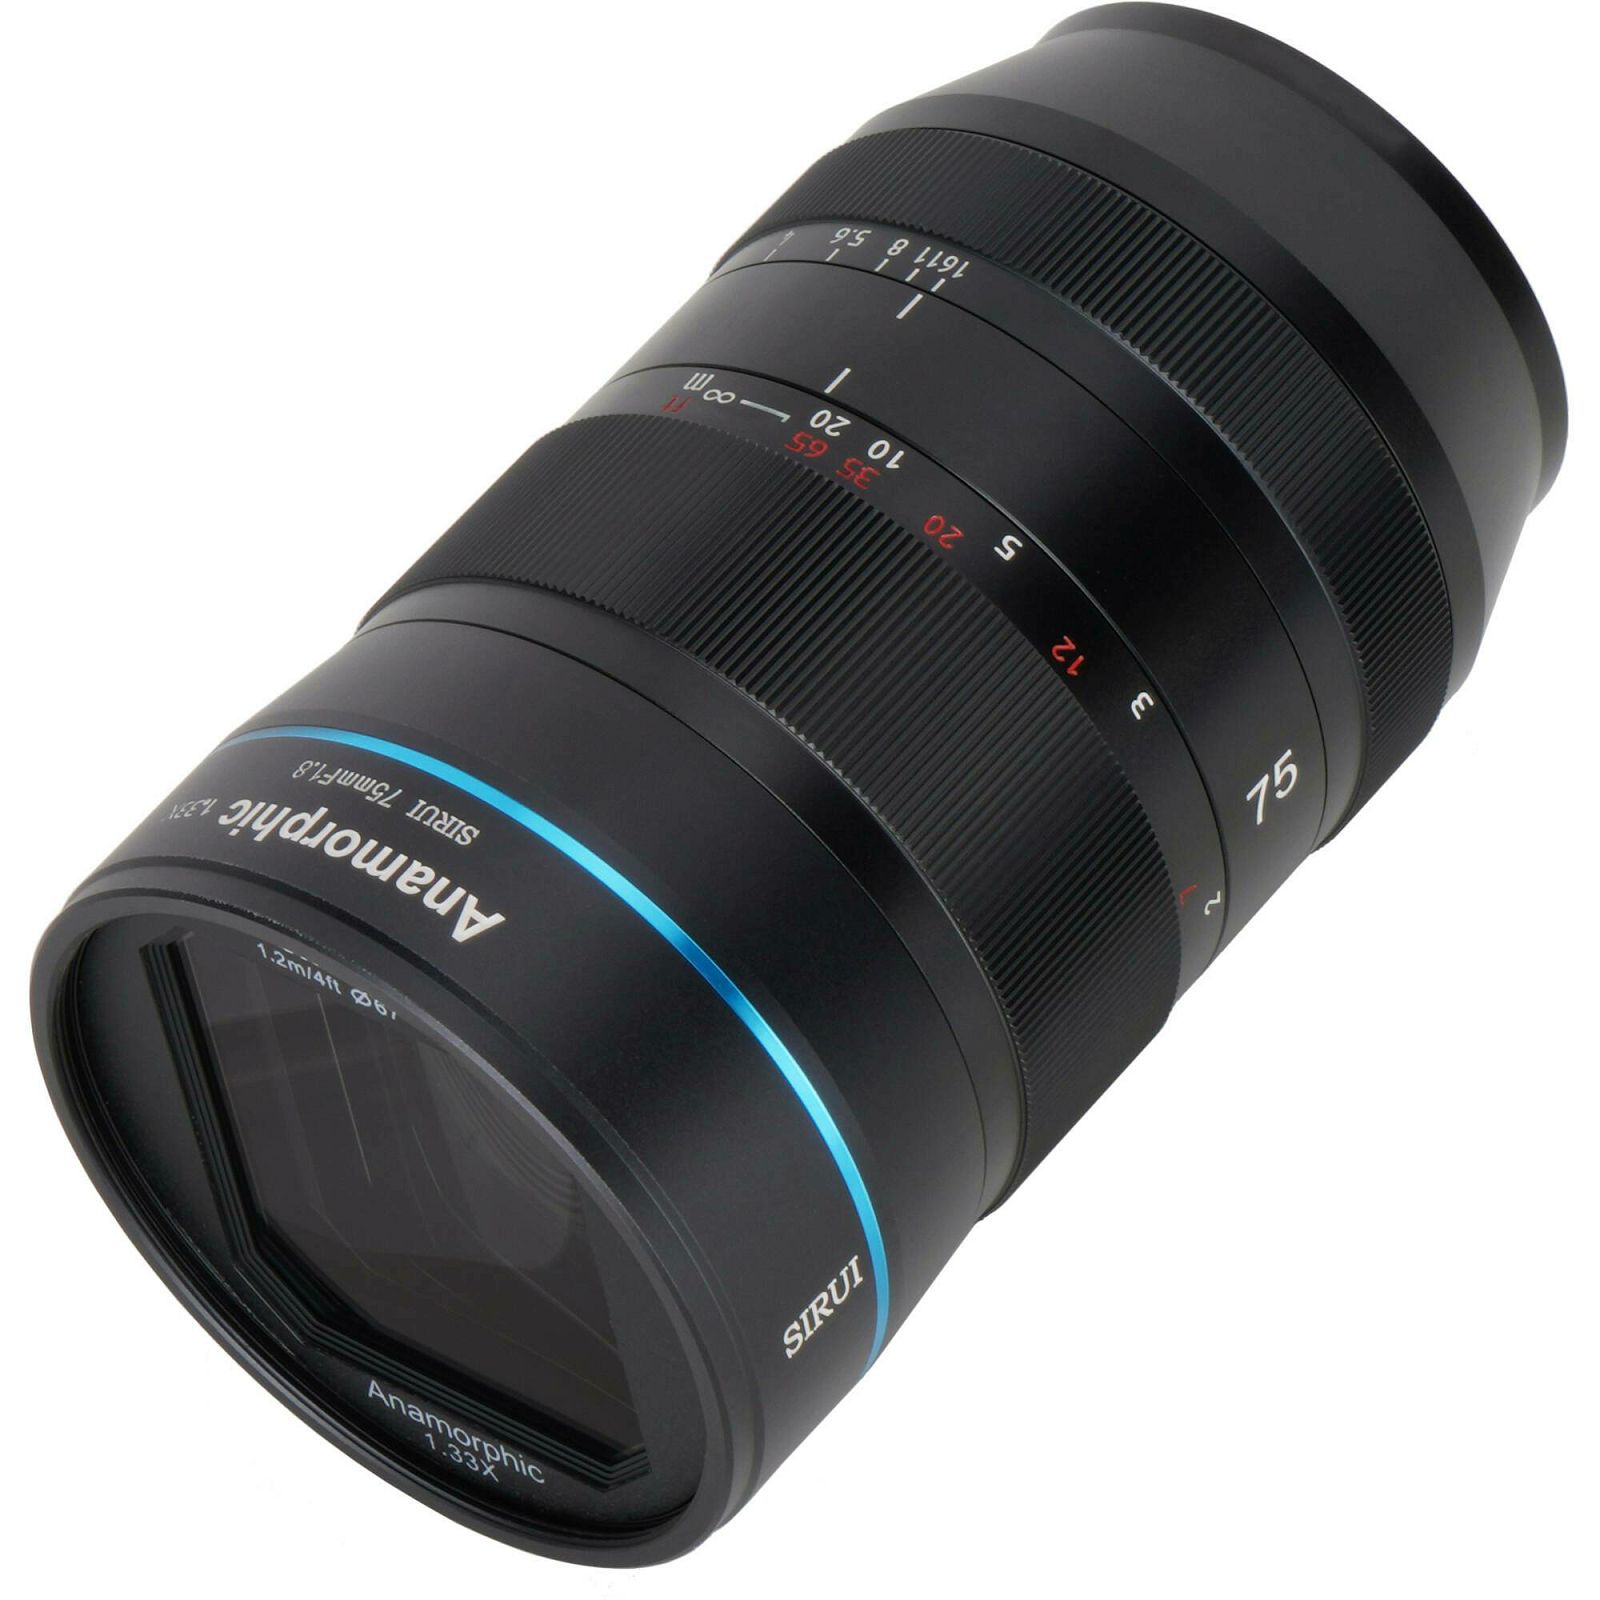 Sirui 75mm f/1.8 1.33x Anamorphic lens objektiv za Olympus Panasonic MFT micro4/3" (SR75-MFT)